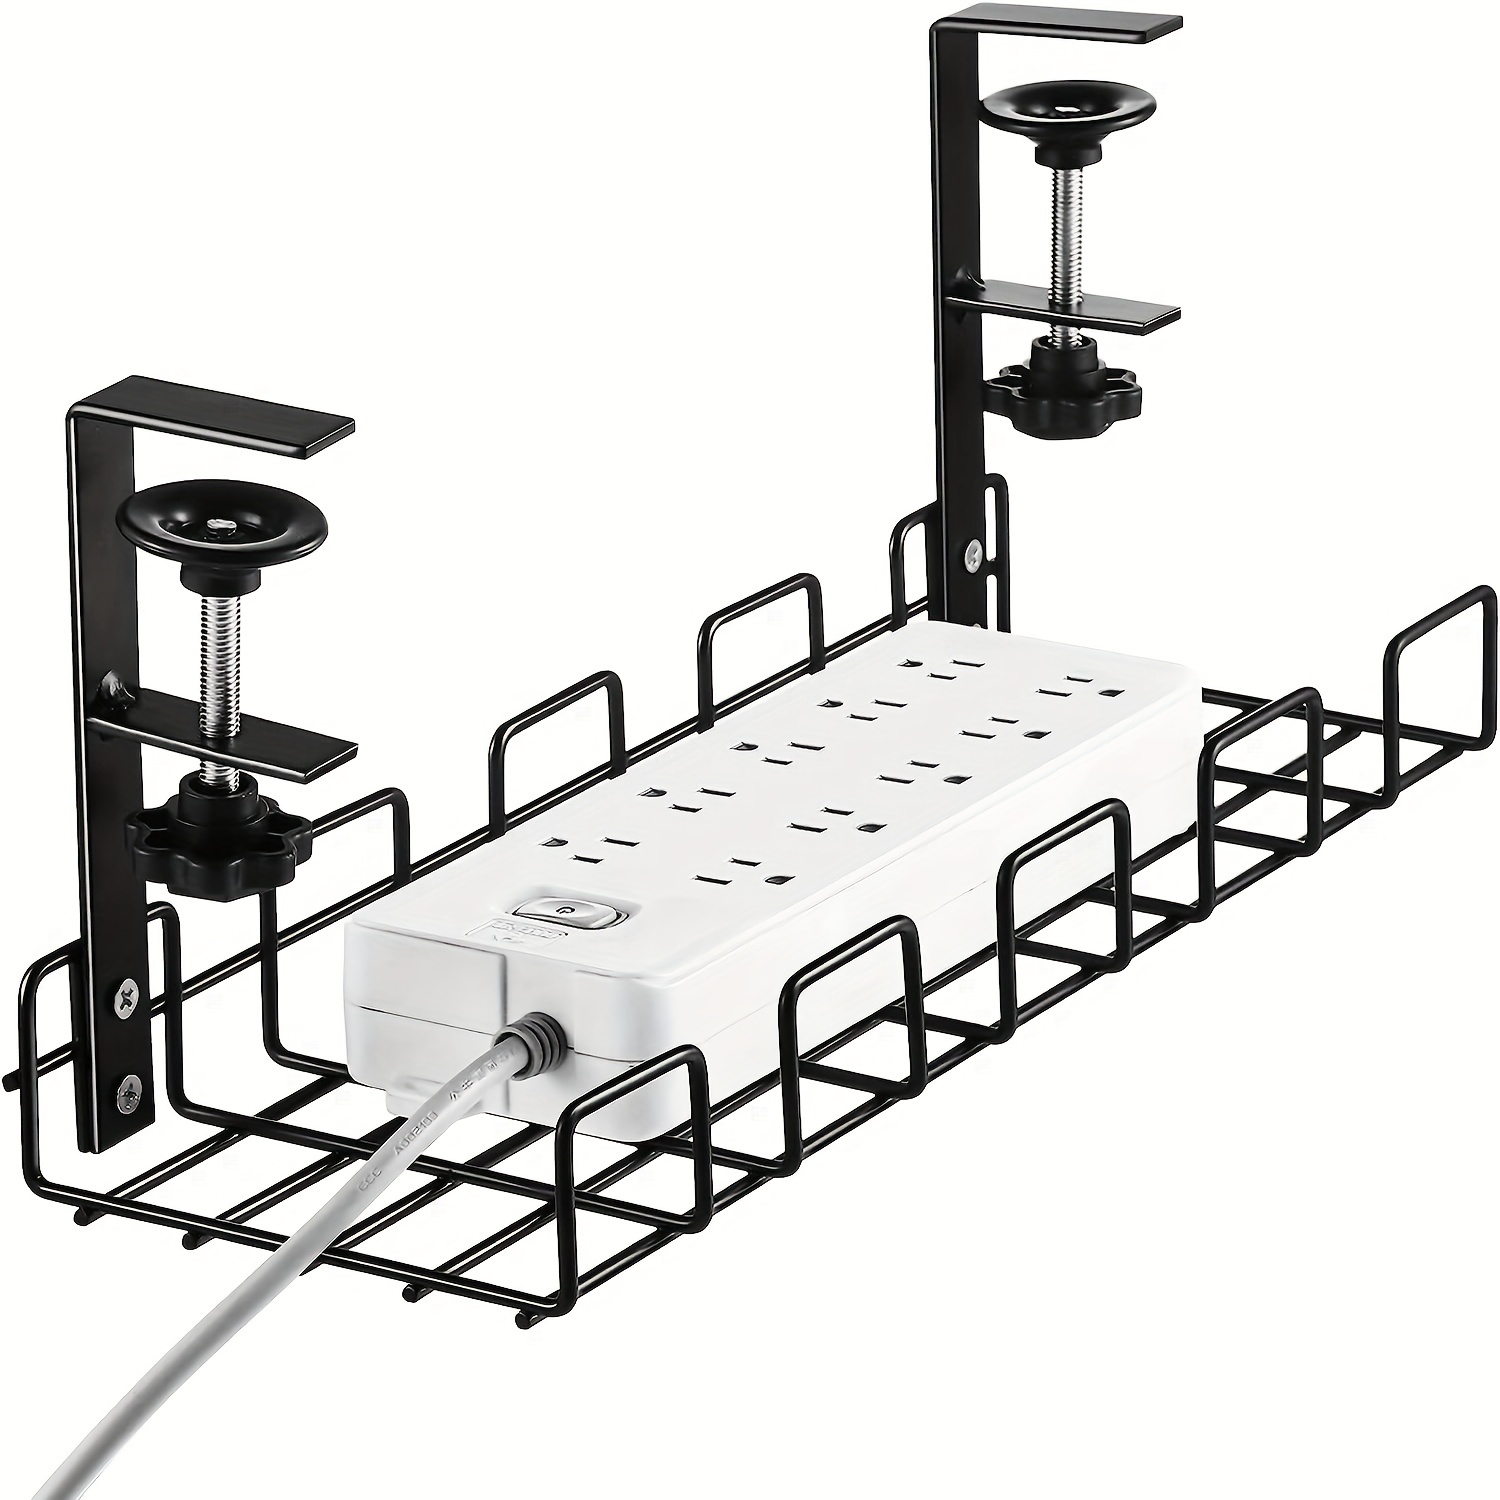 Una foto di un funzionale organizer per cavi da scrivania per mantenere i  cavi ordinati e liberi da grovigli